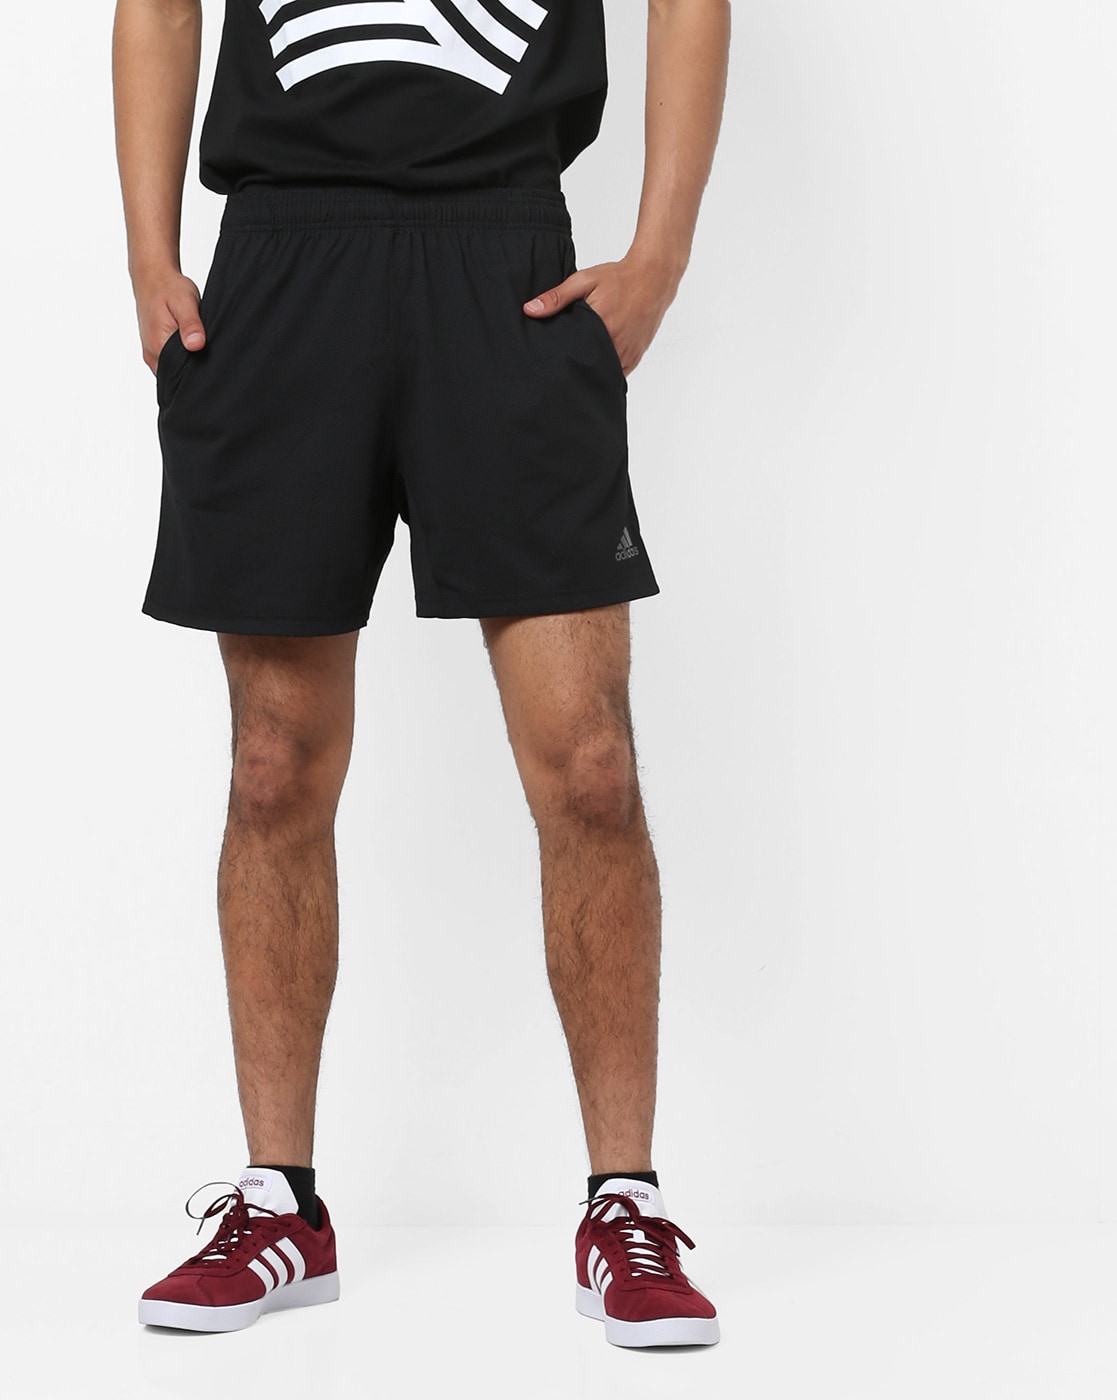 adidas shorts with zip pockets